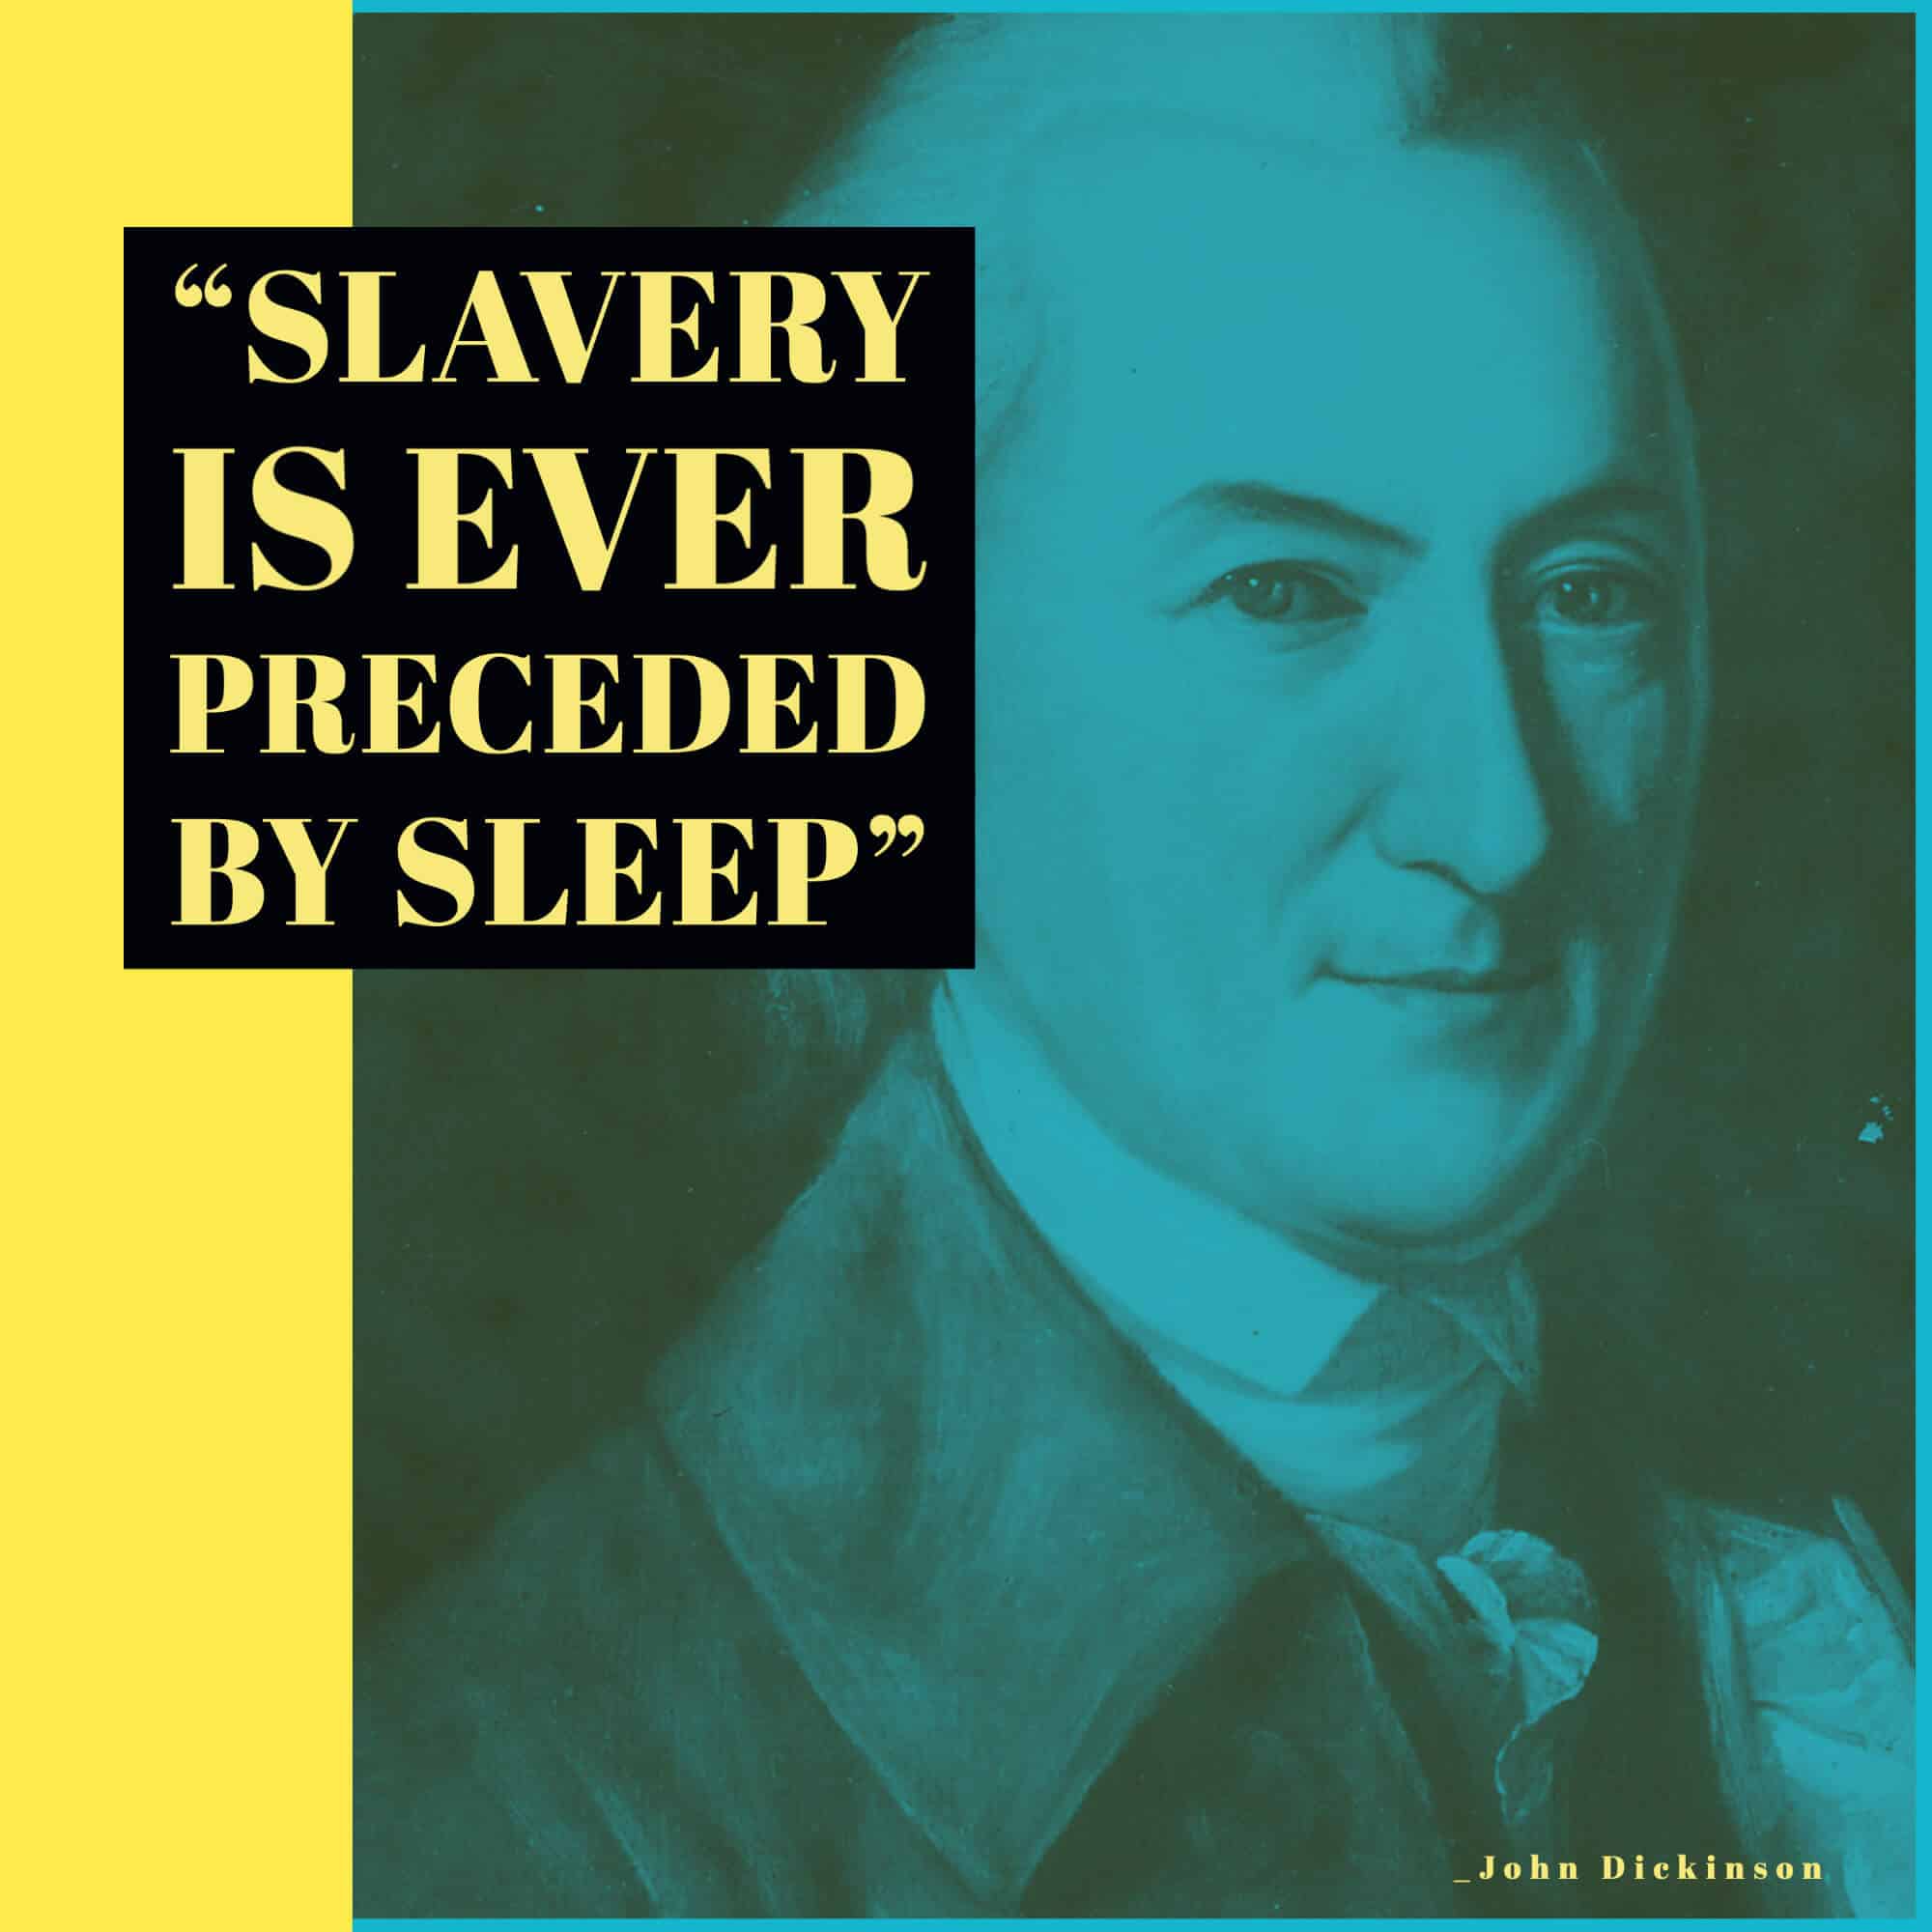 “Slavery is ever preceded by sleep”